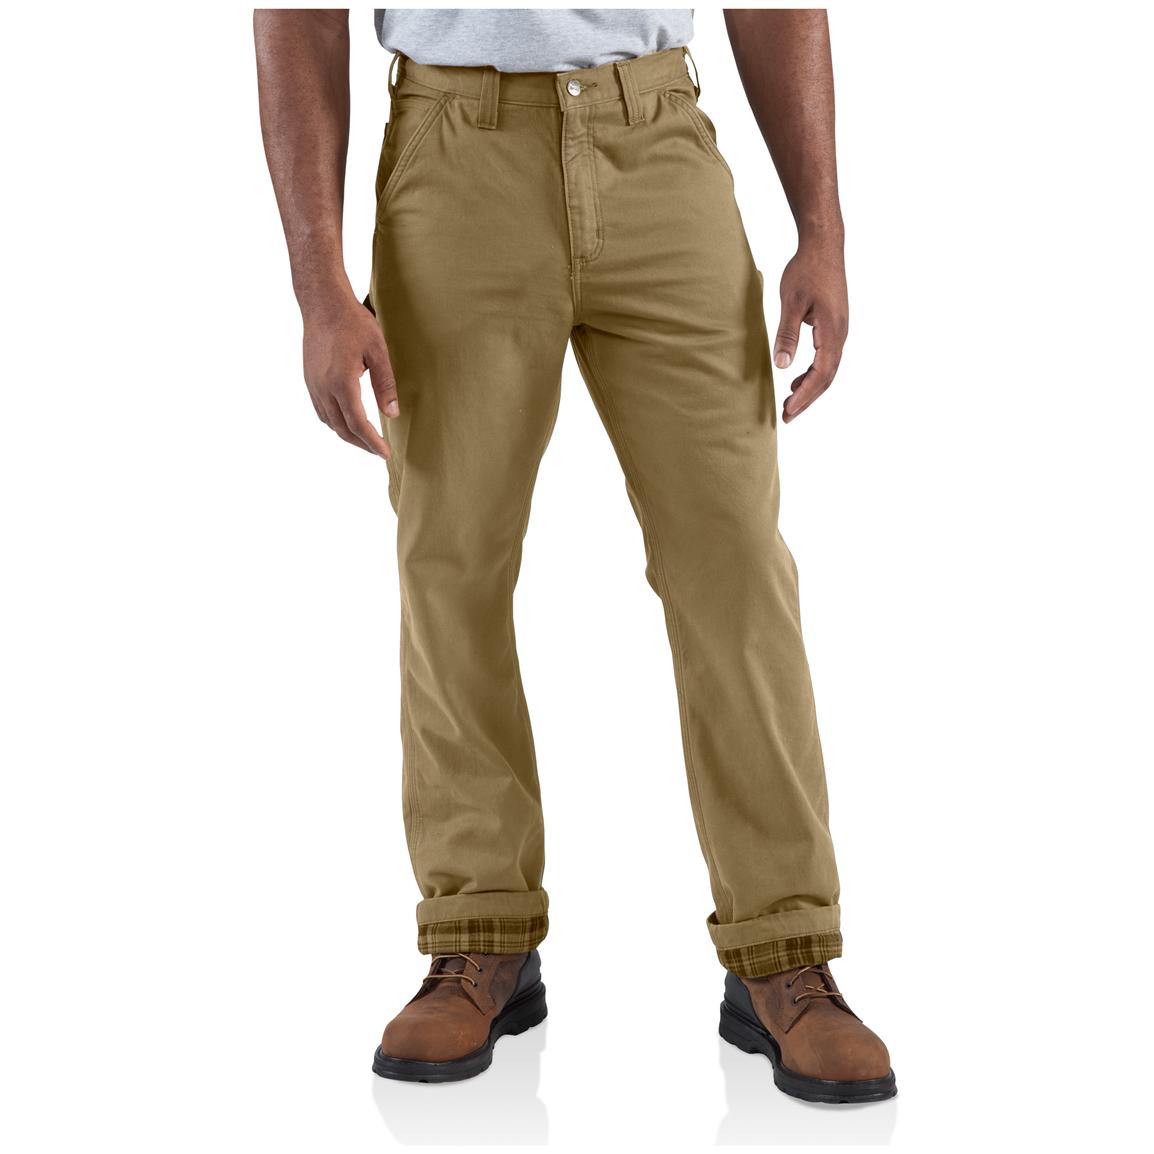 Men's Fleece-lined Flex Mountain Jeans Eddie Bauer Outlet, 54% OFF